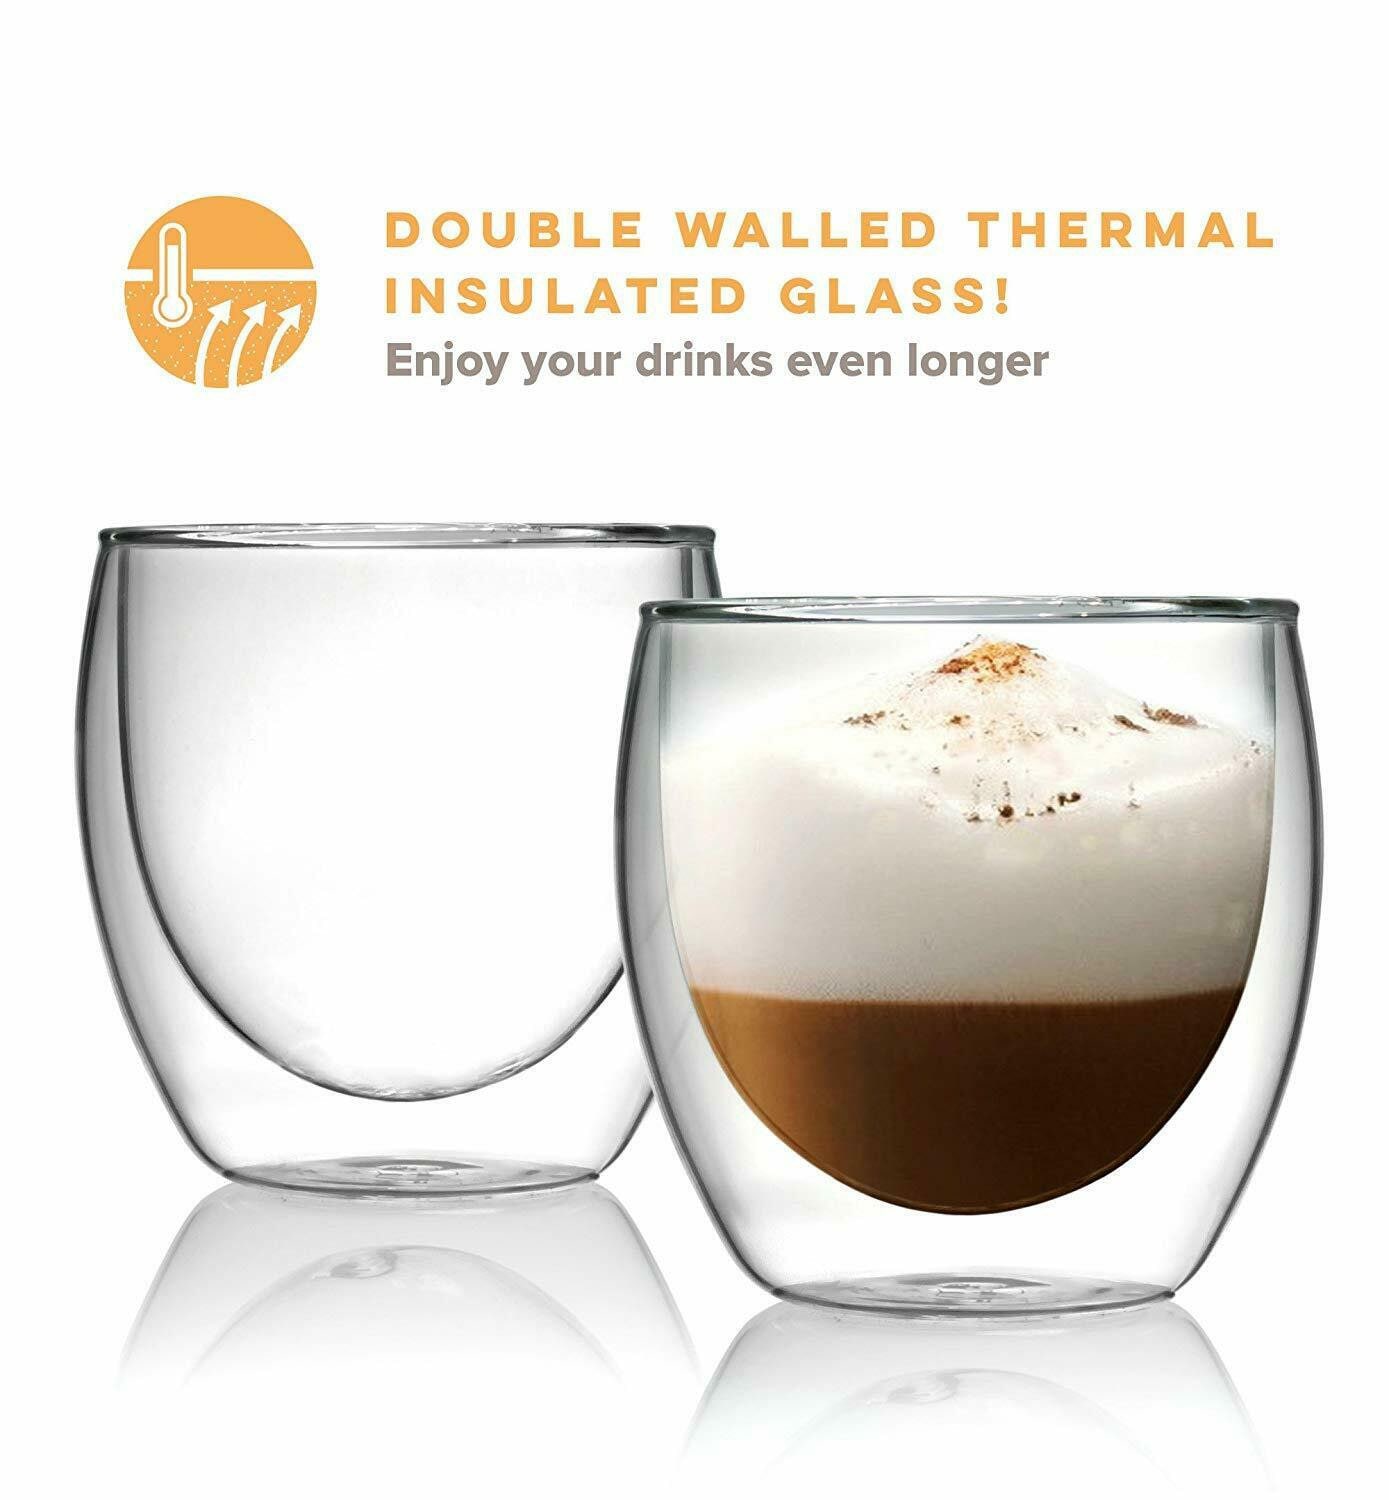 4 8oz Double Wall Tea Coffee Mugs, Thermal Insulated Glass Modern